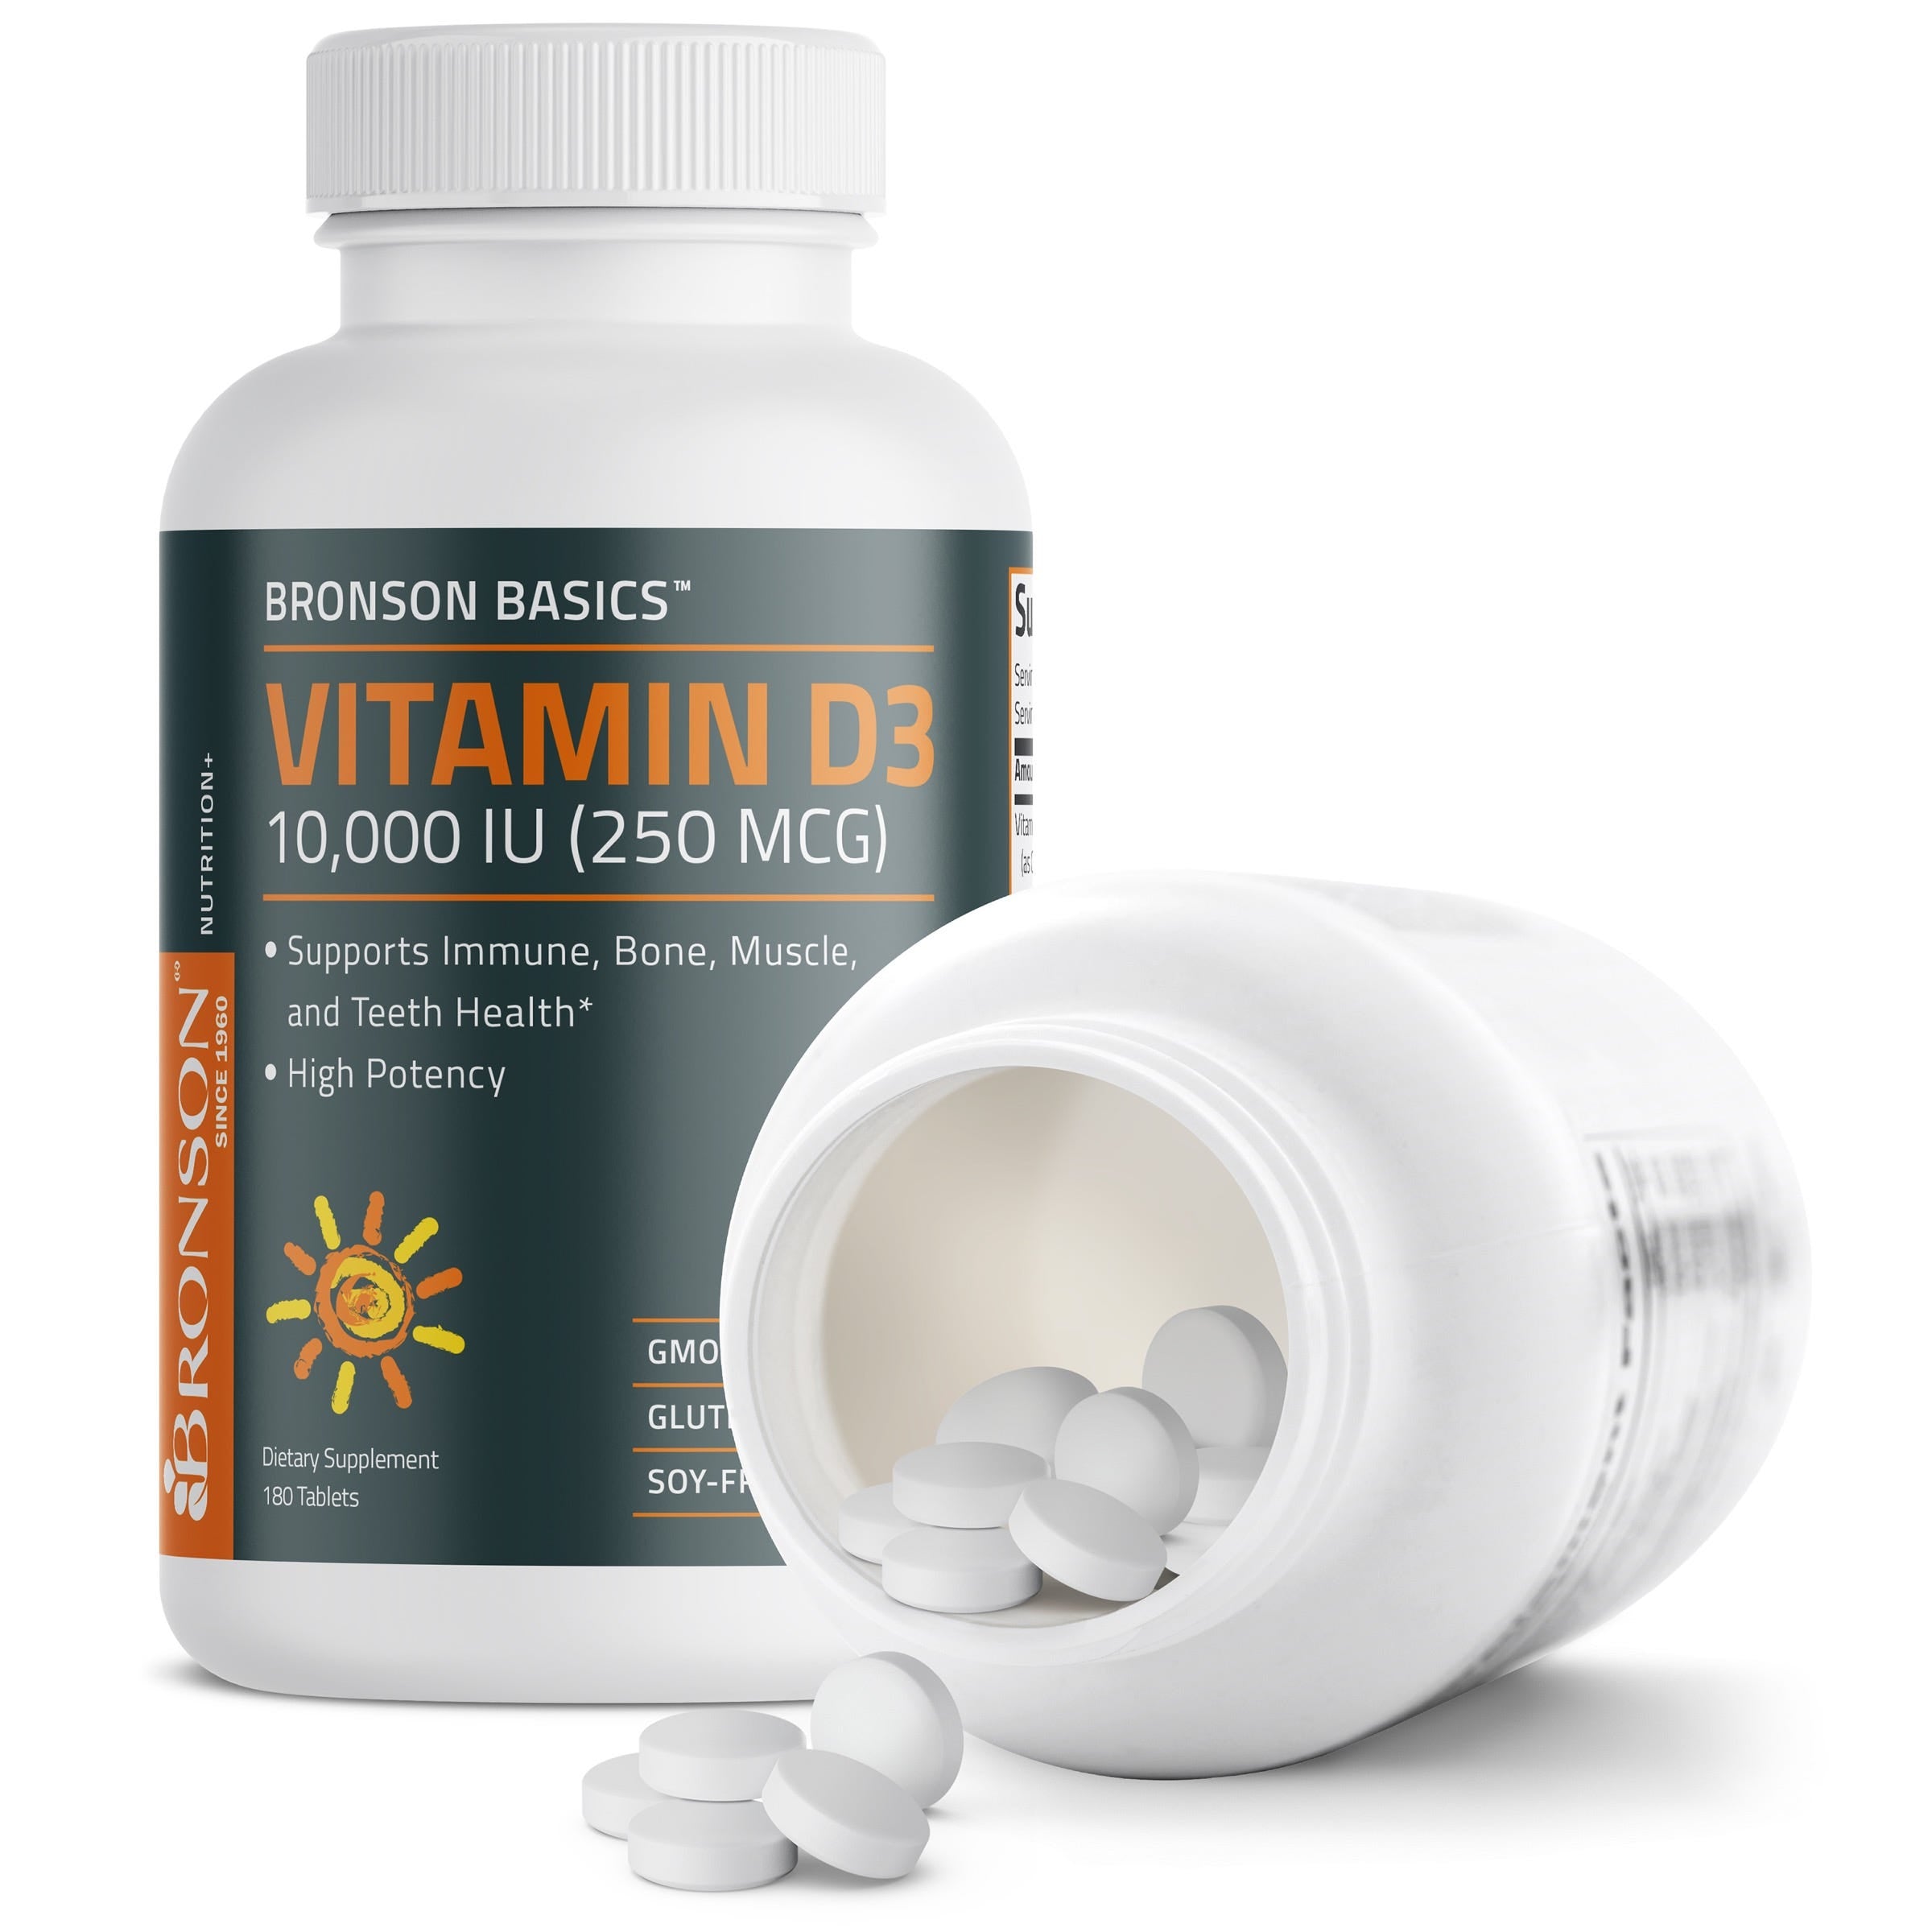 Vitamin D3 10,000 IU (250 MCG) view 4 of 6